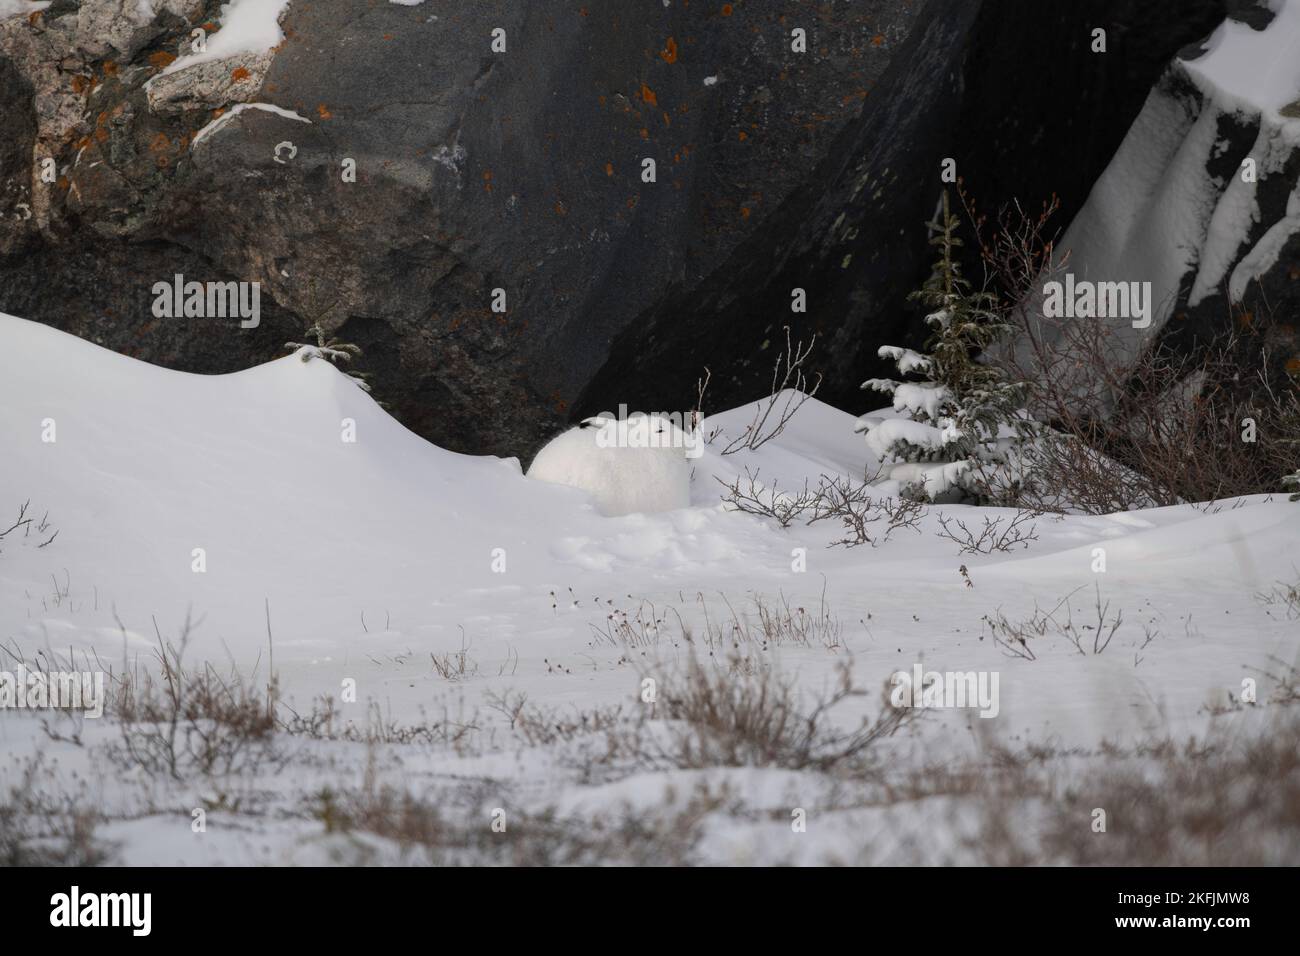 Arctic hare in snow Stock Photo